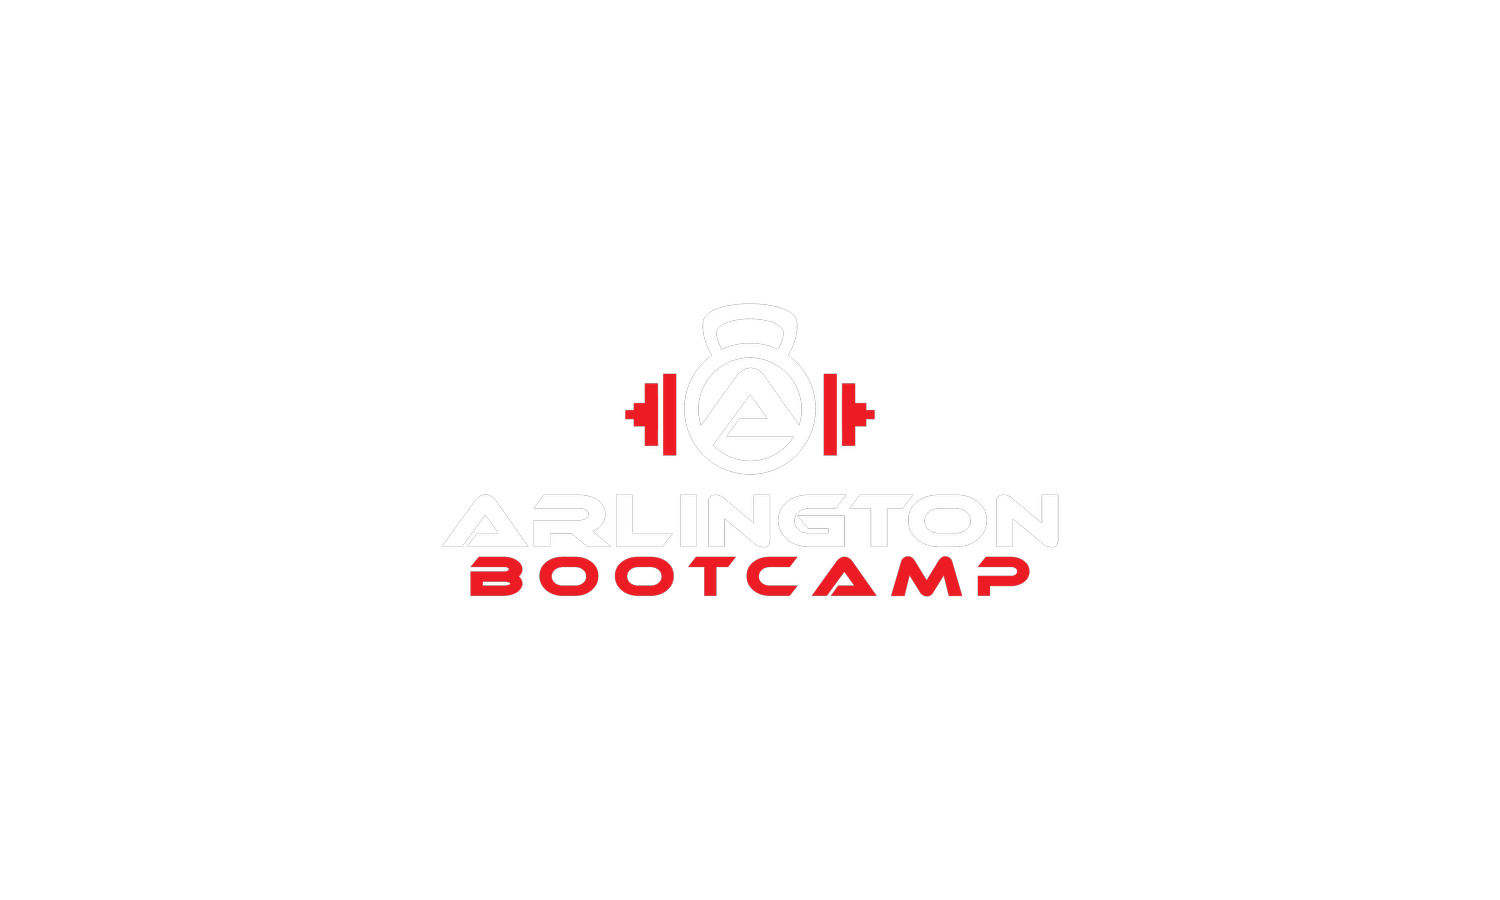 Arlington Bootcamp